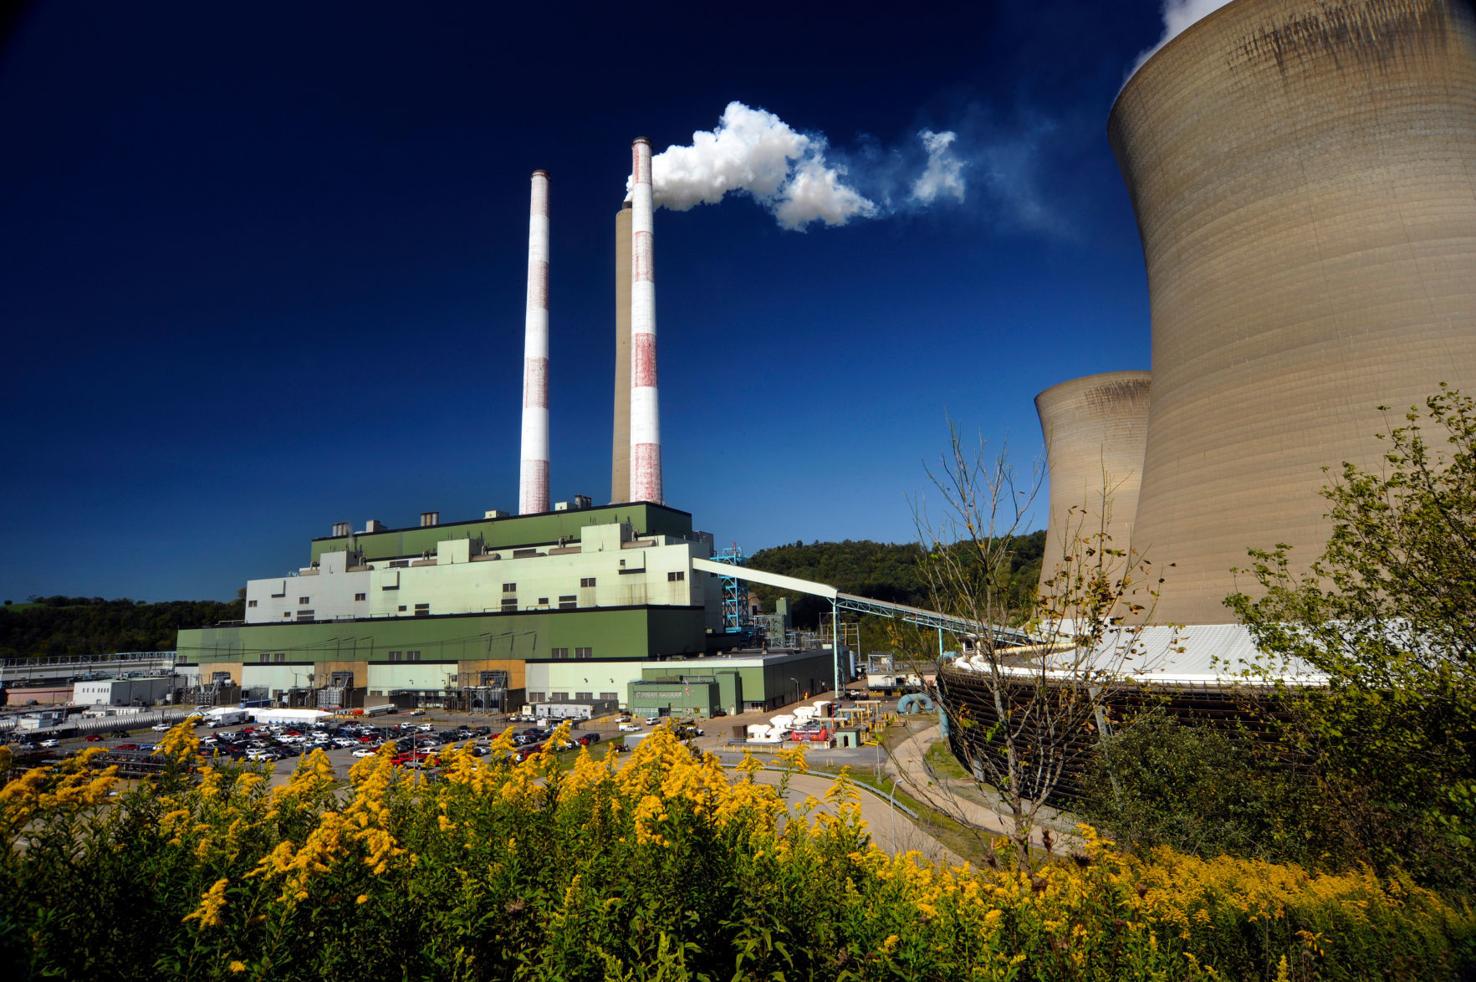 Sierra Club: Harrison County Coal Plant Among The Nation’s Deadliest